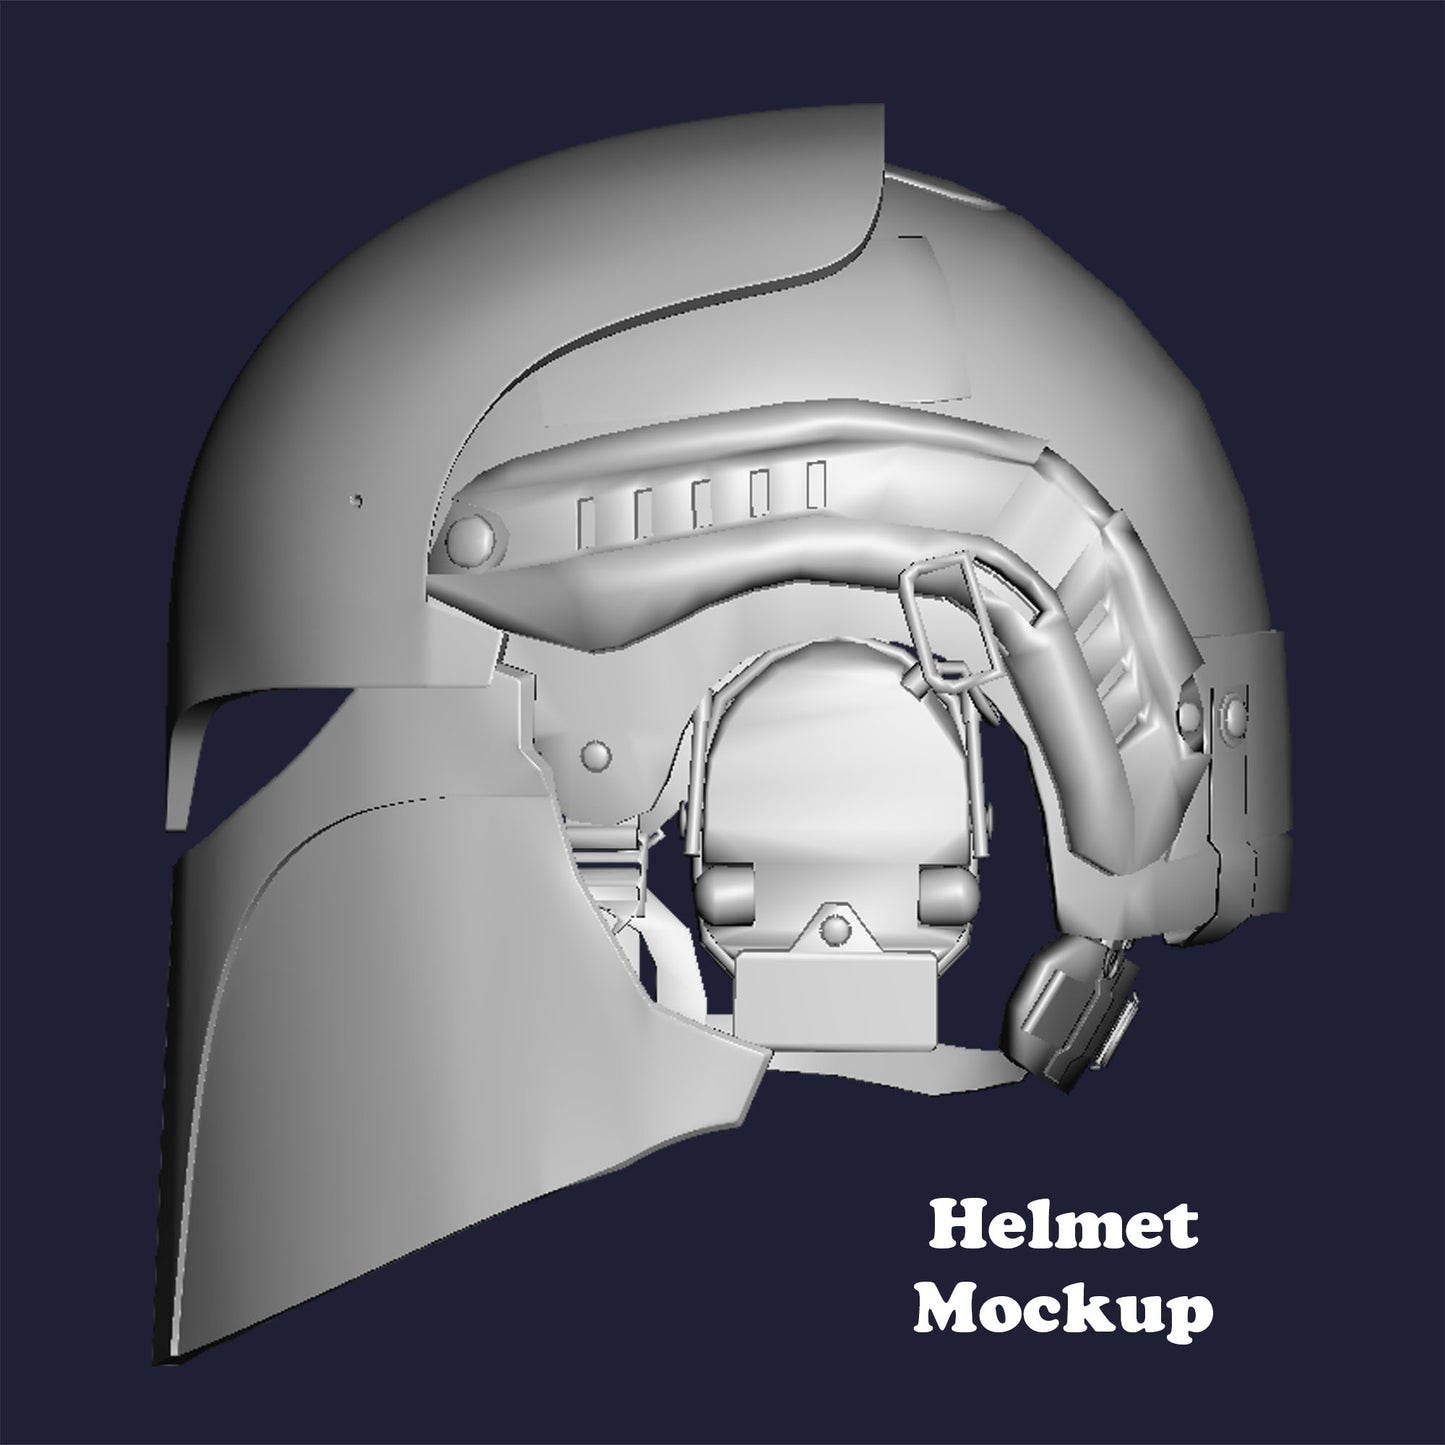 Clan Wren/Sabine Inspired Mask for Tactical Helmets Digital Files